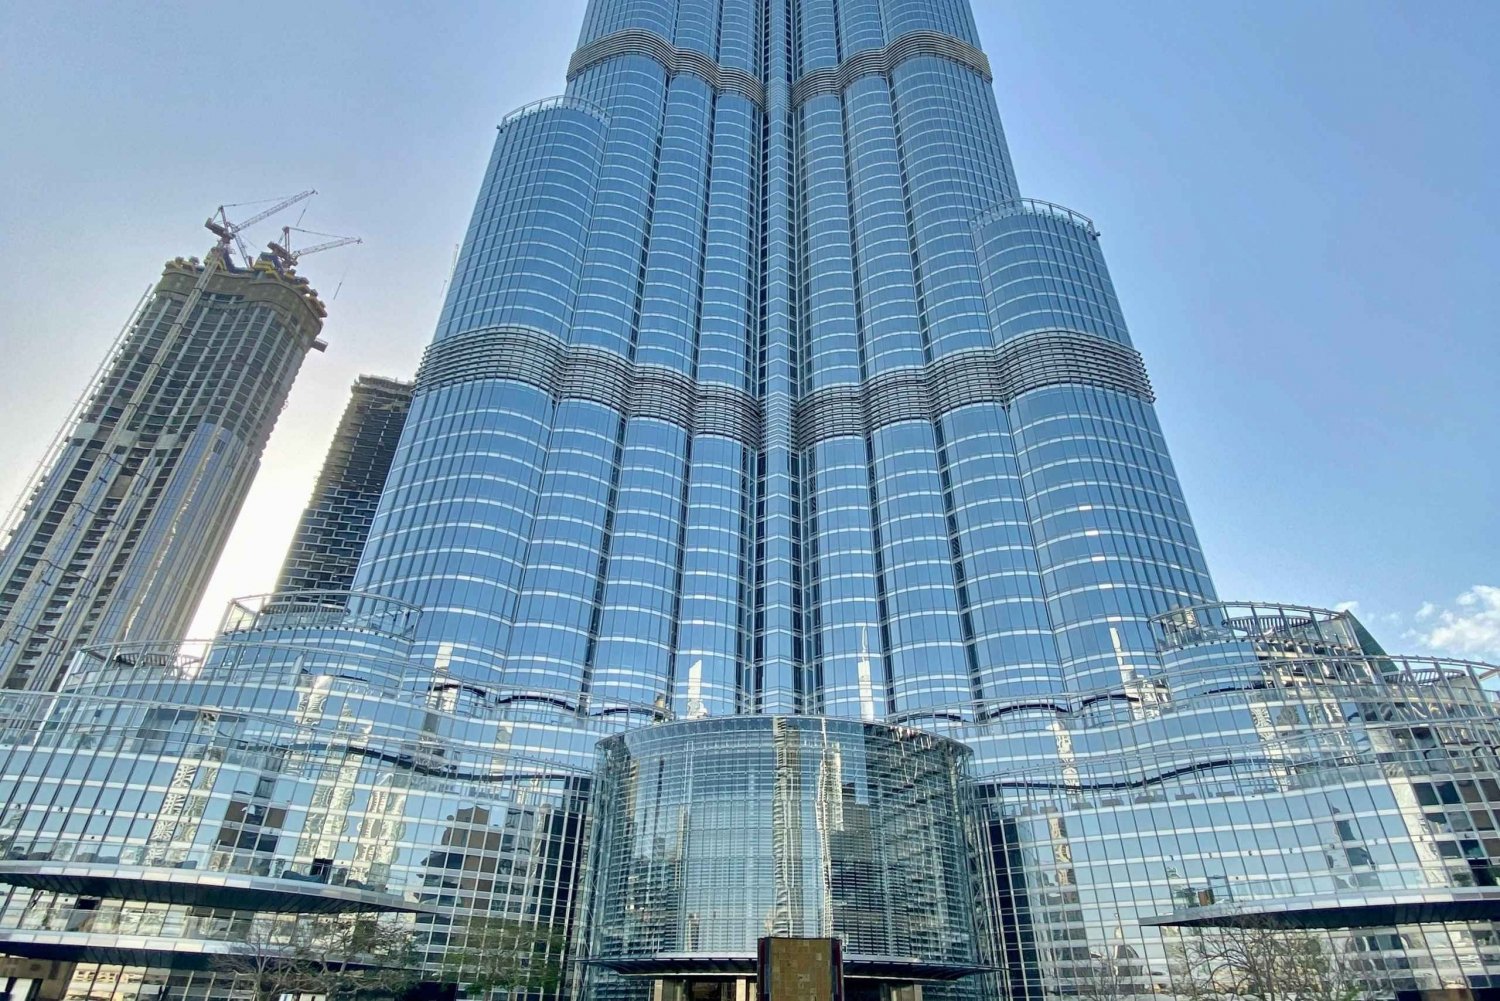 Privat byrundtur i Dubai